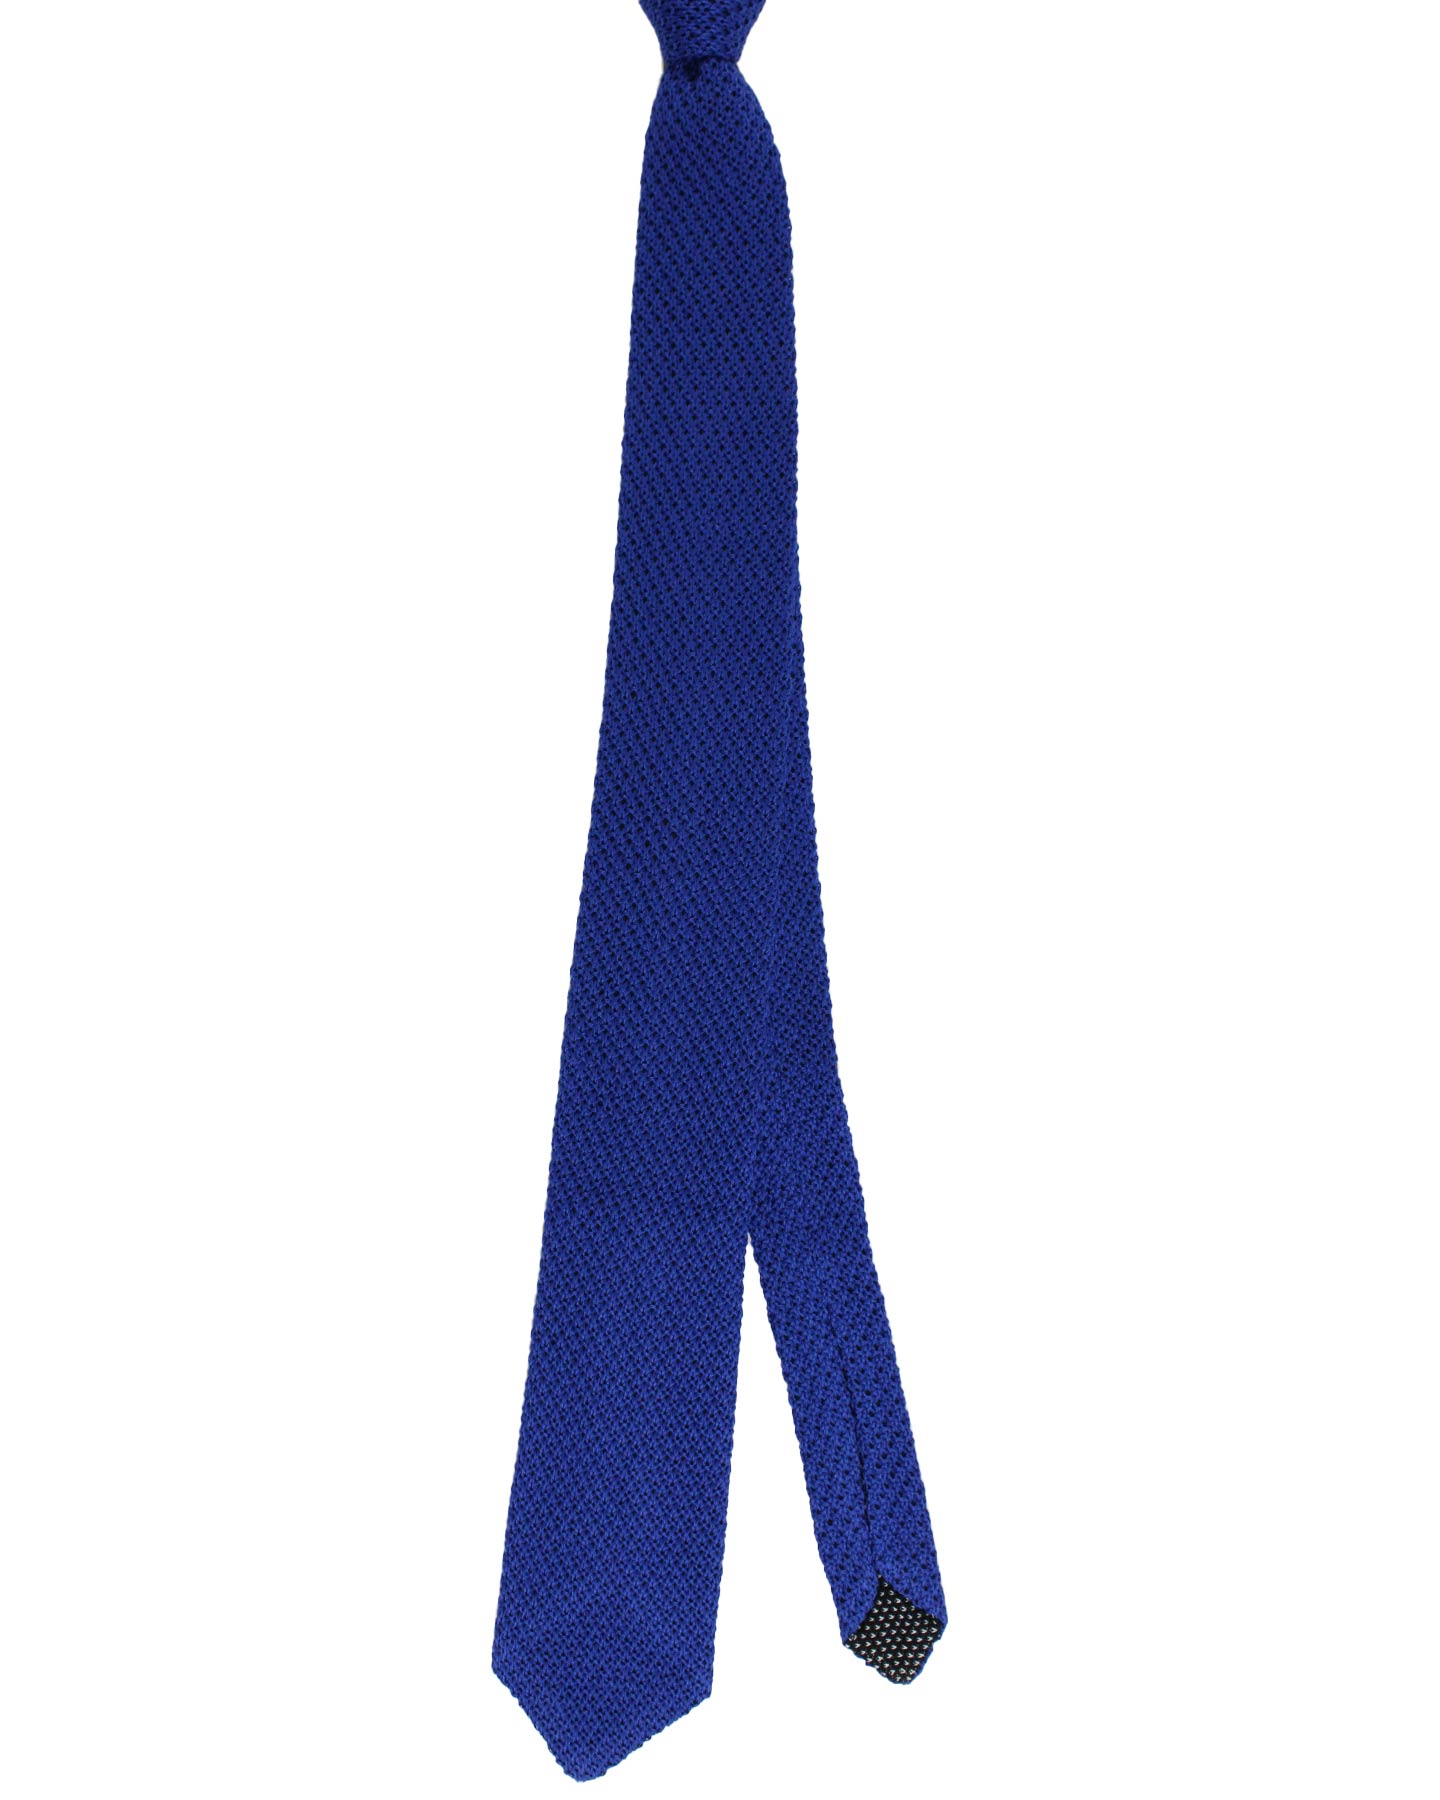 Kiton Narrow Tie Royal Blue Knitted Necktie - Cipa 1960 SALE